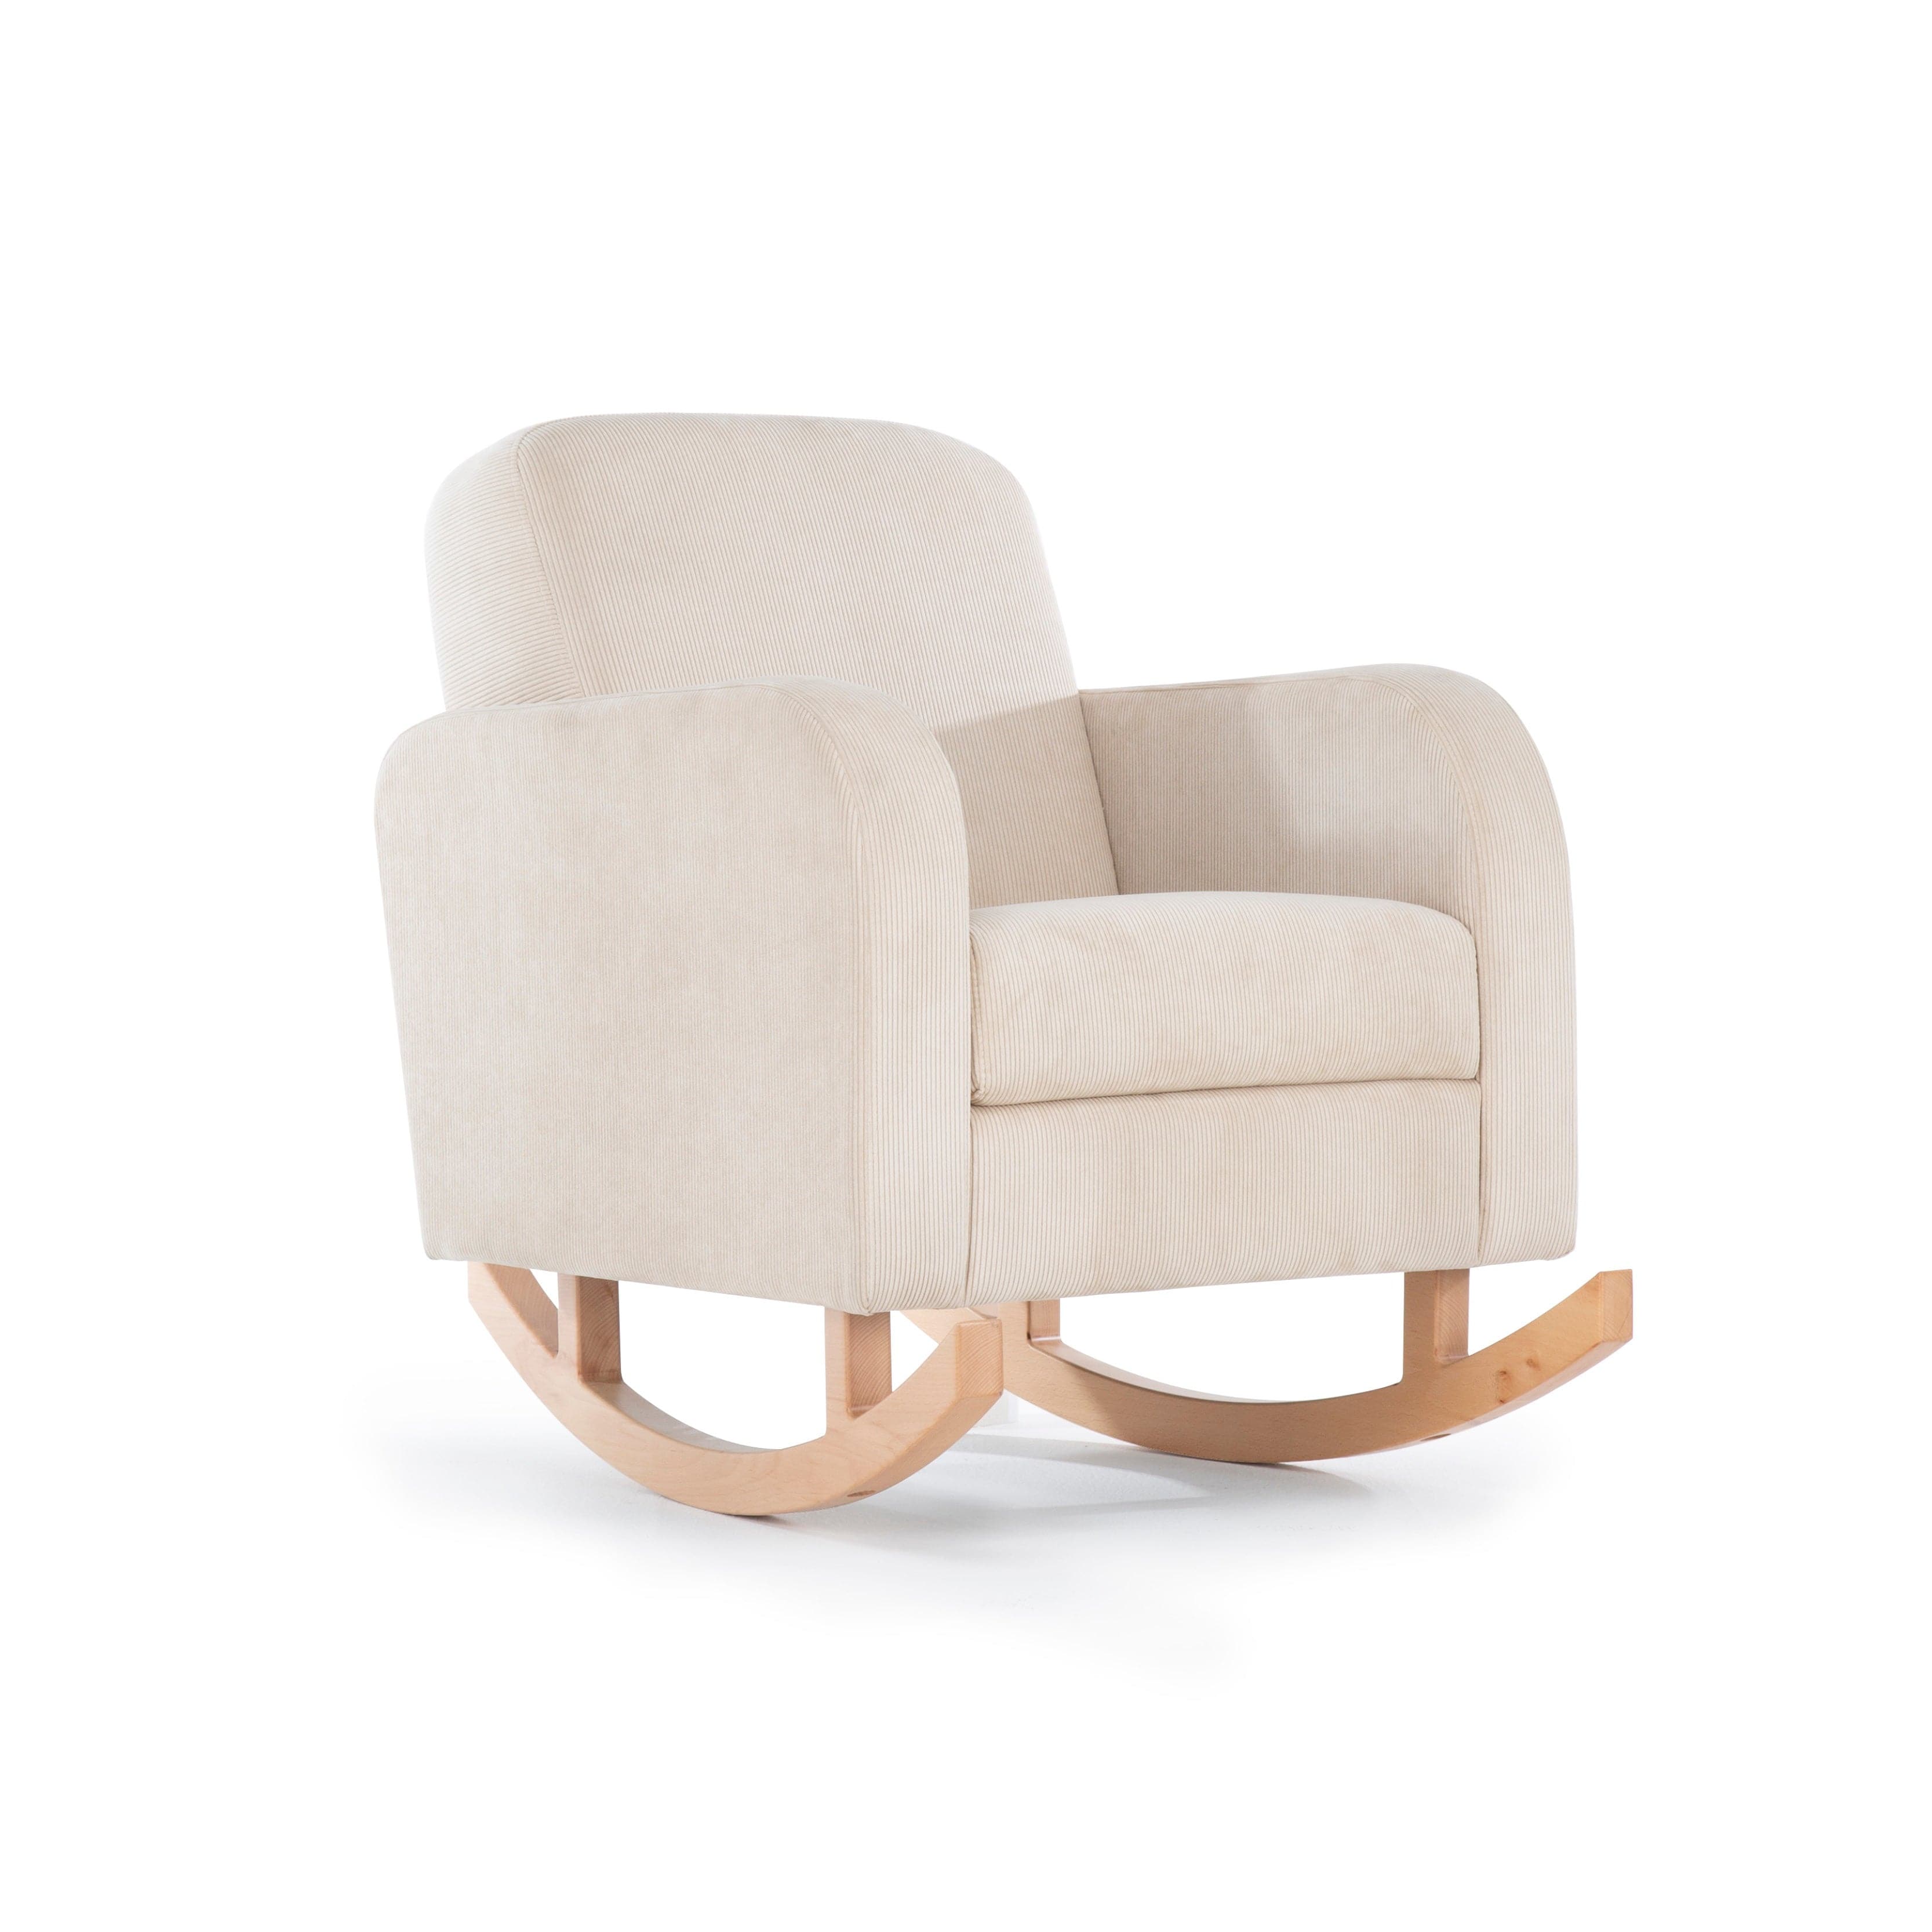 Cuddleco Etta Nursing Chair - Sand - For Your Little One